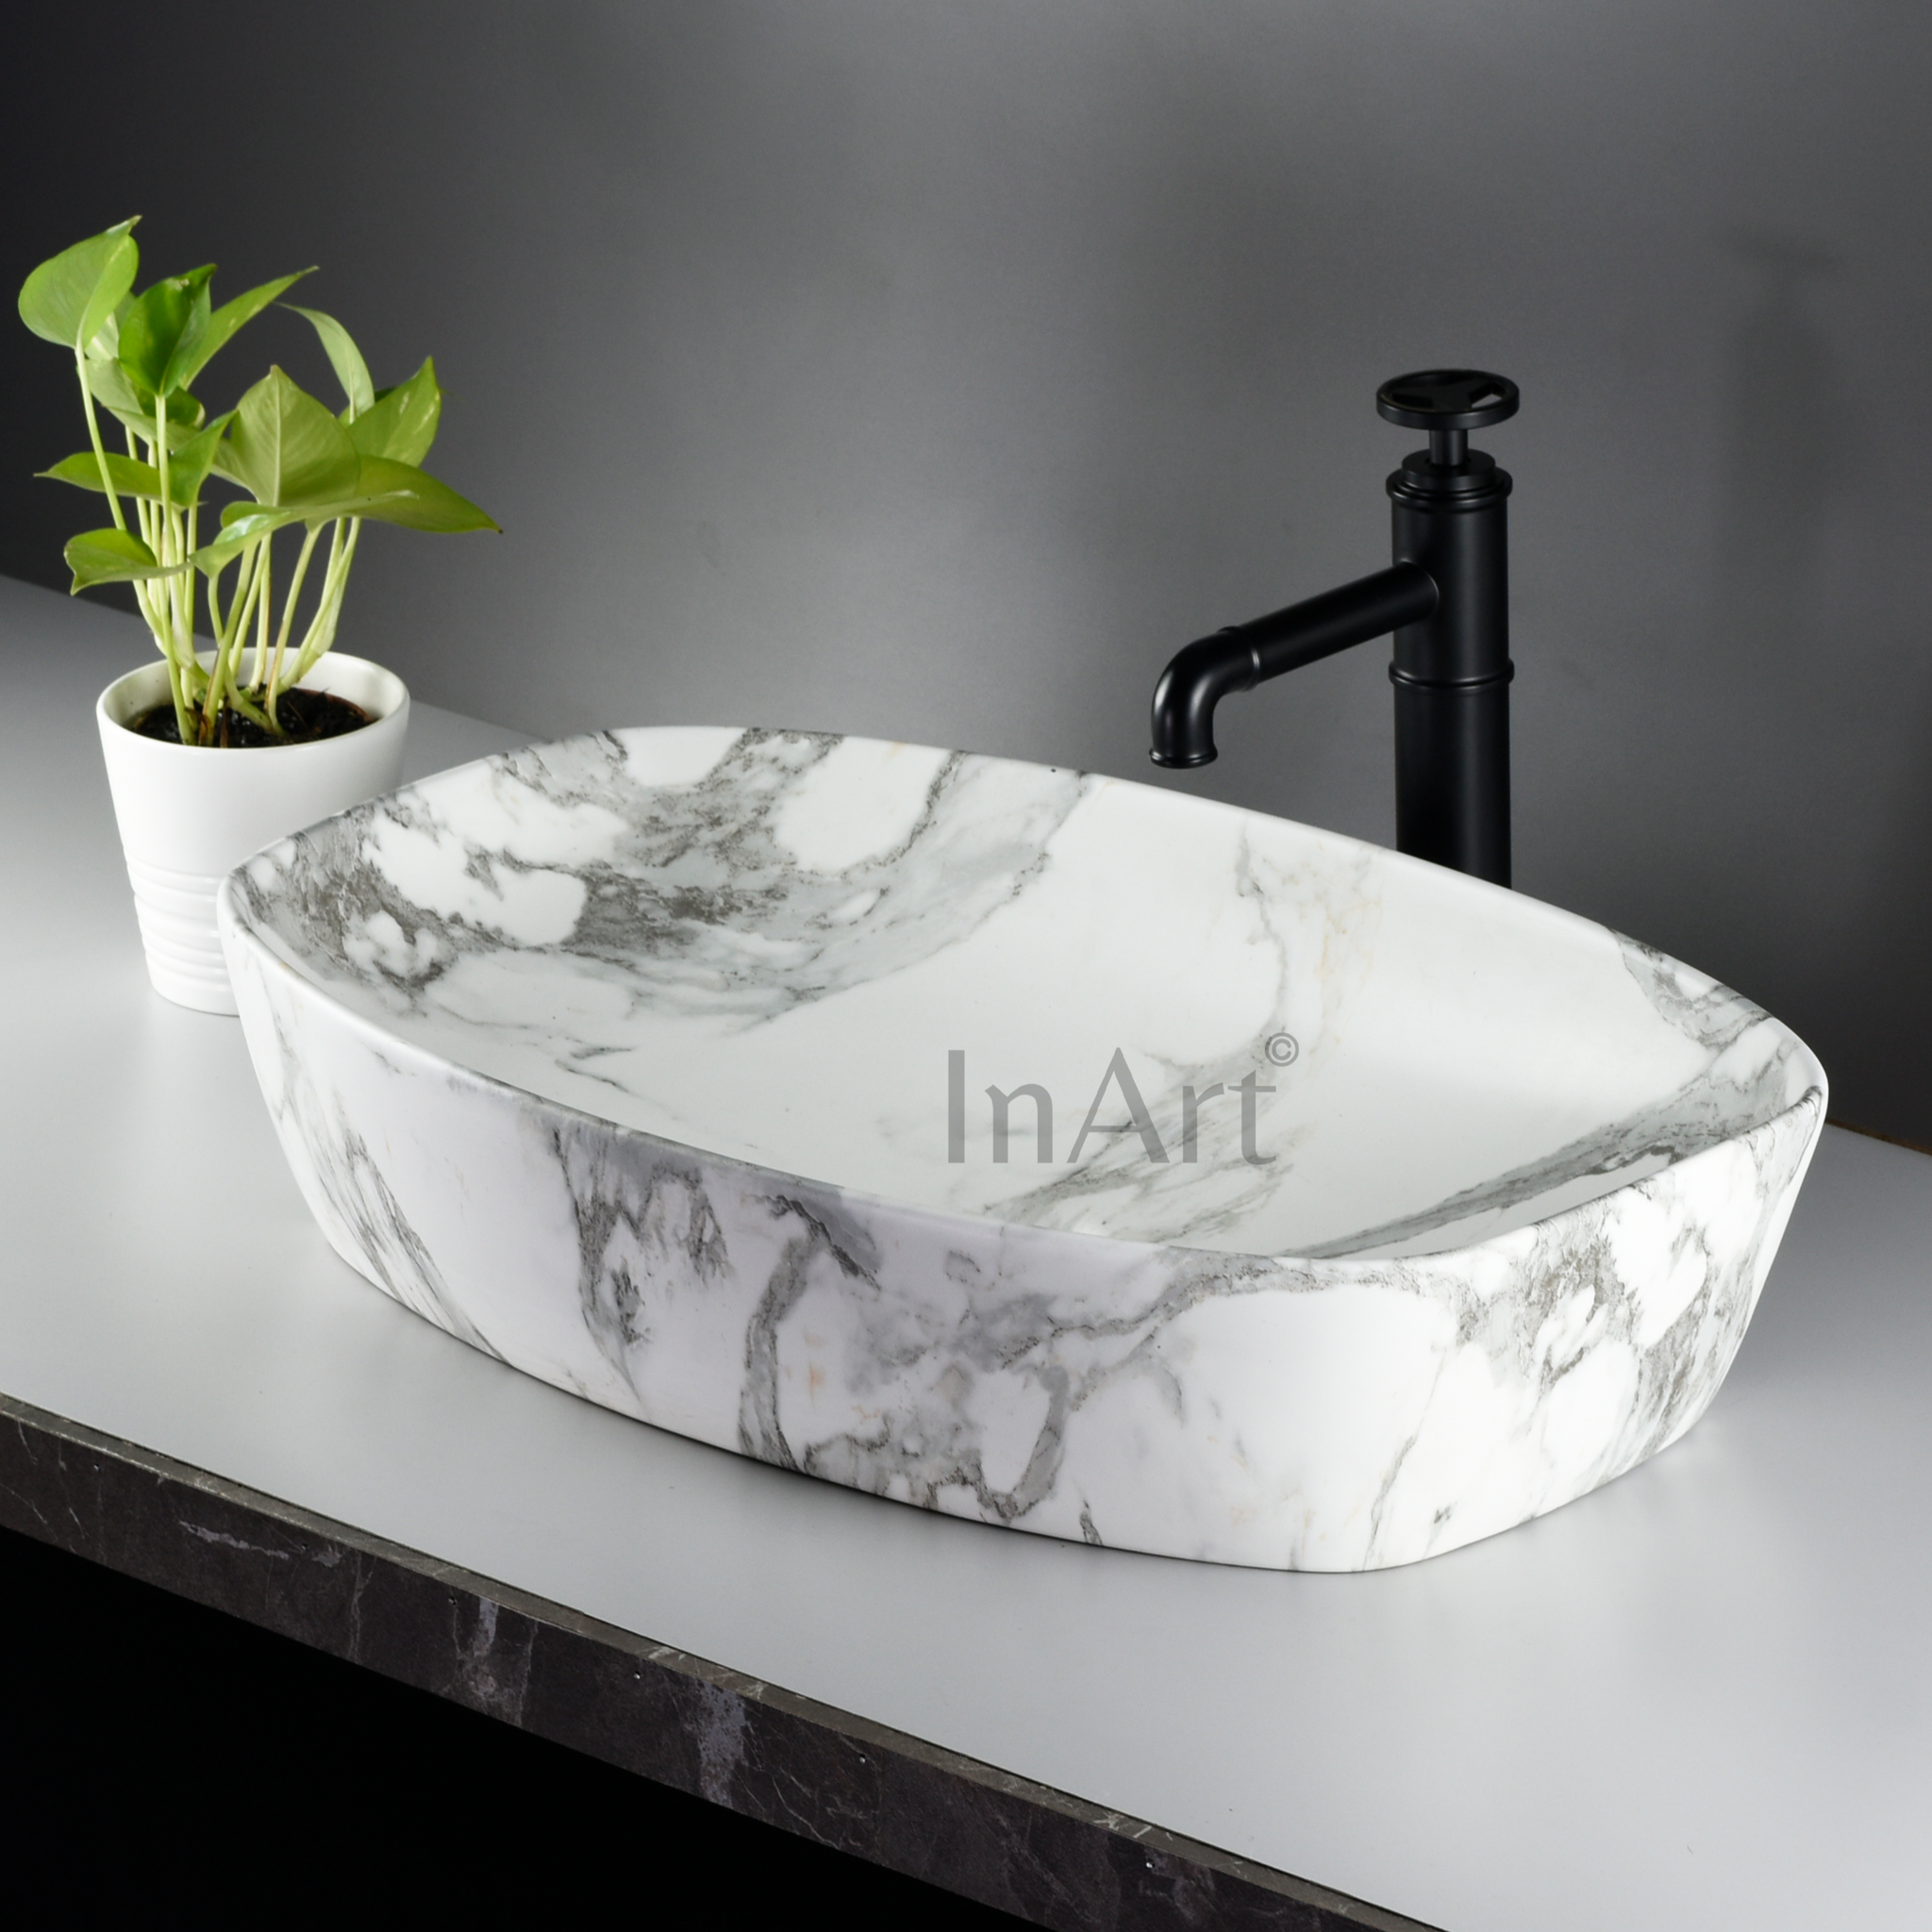 InArt Ceramic Counter or Table Top Wash Basin Matt White Grey Marble 60 x 37 CM - InArt-Studio